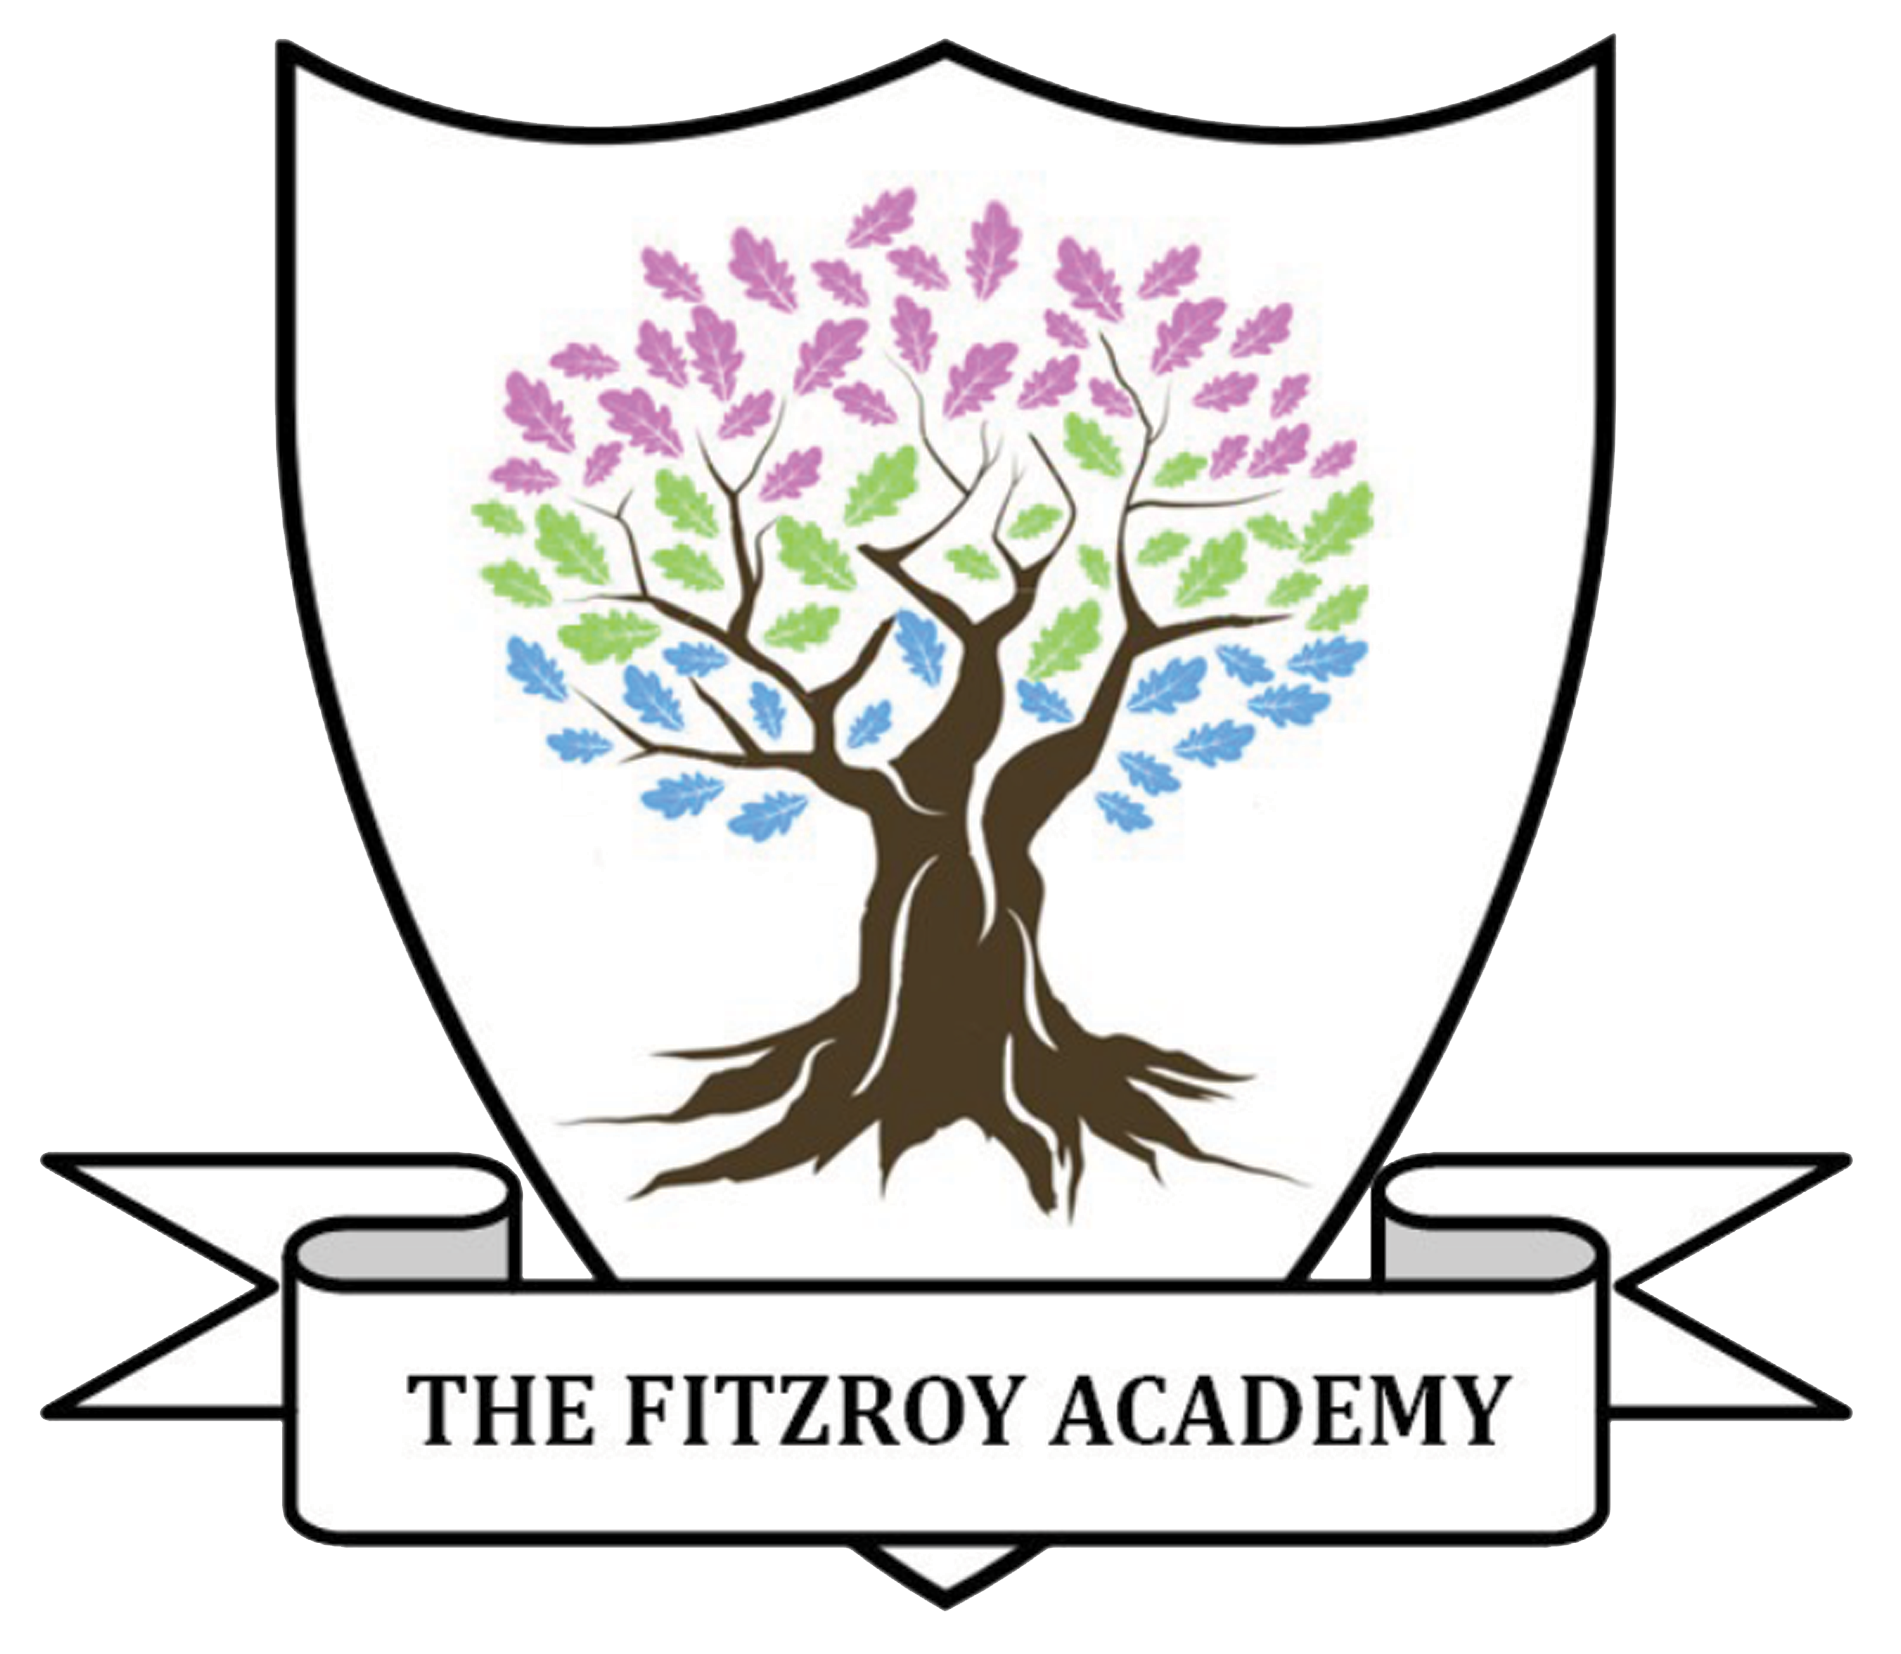 The Fitzroy Academy